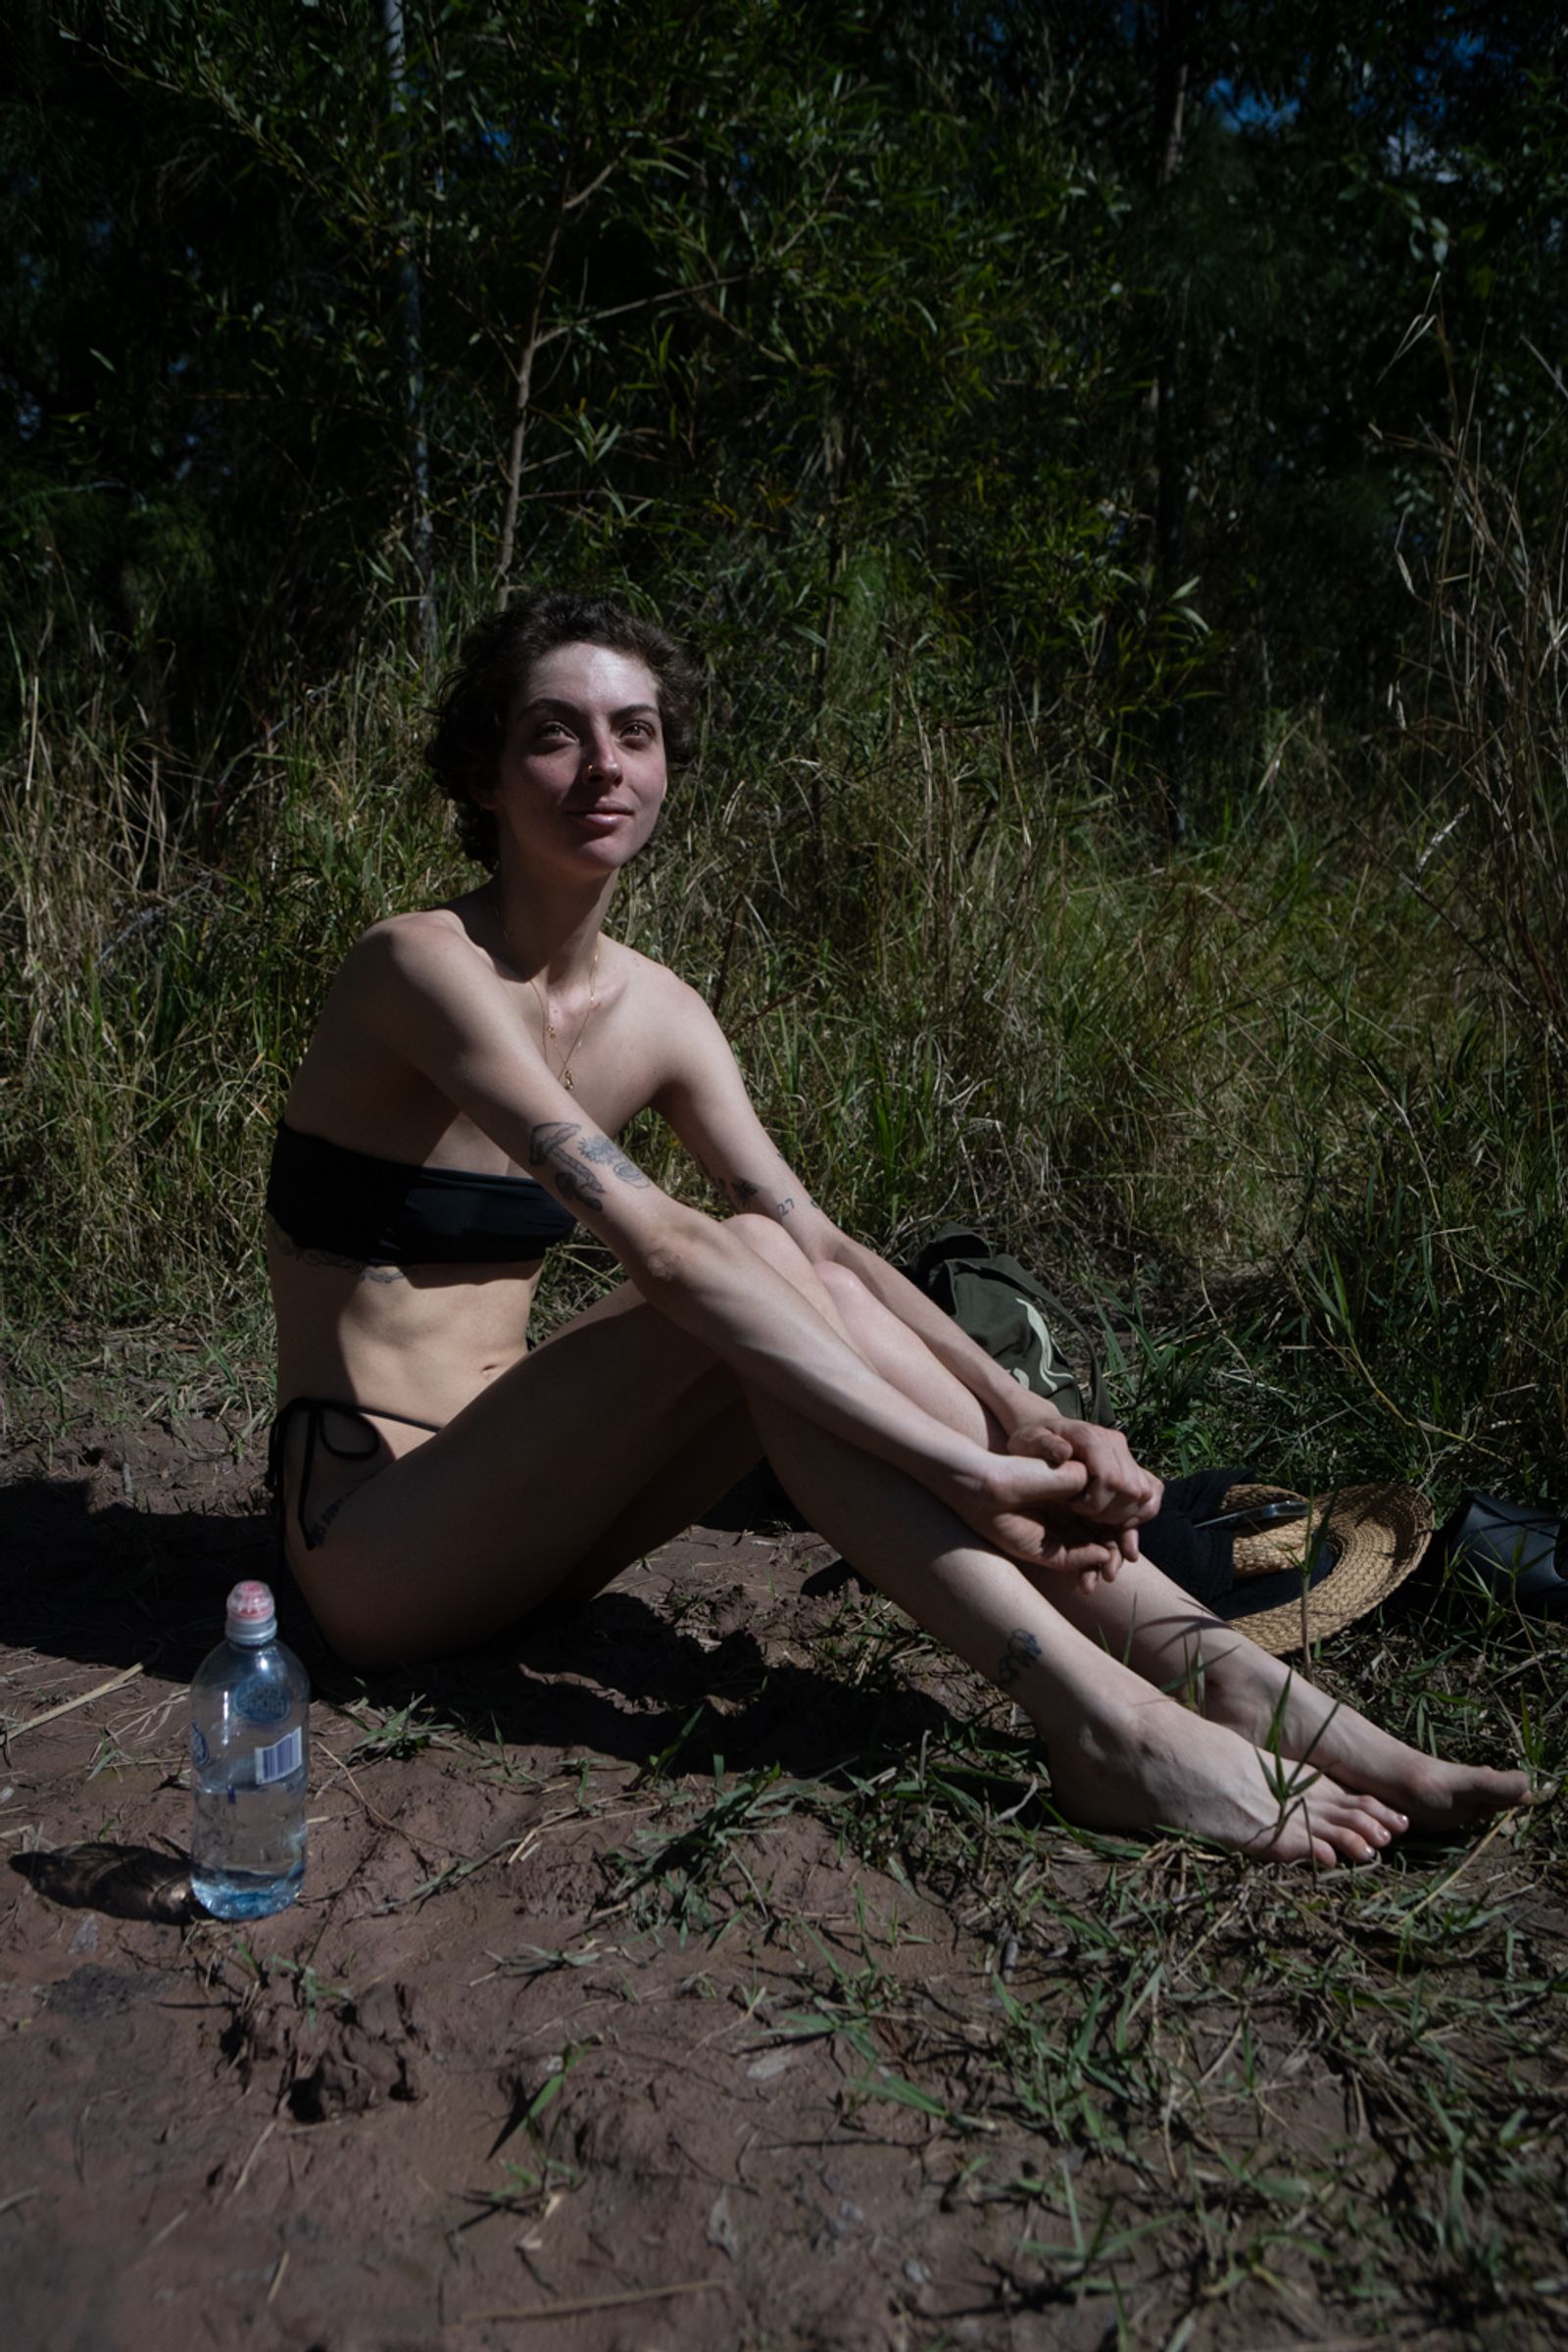 © Tajette O'halloran - A girl 'having a sad day" sits on the bank after a swim